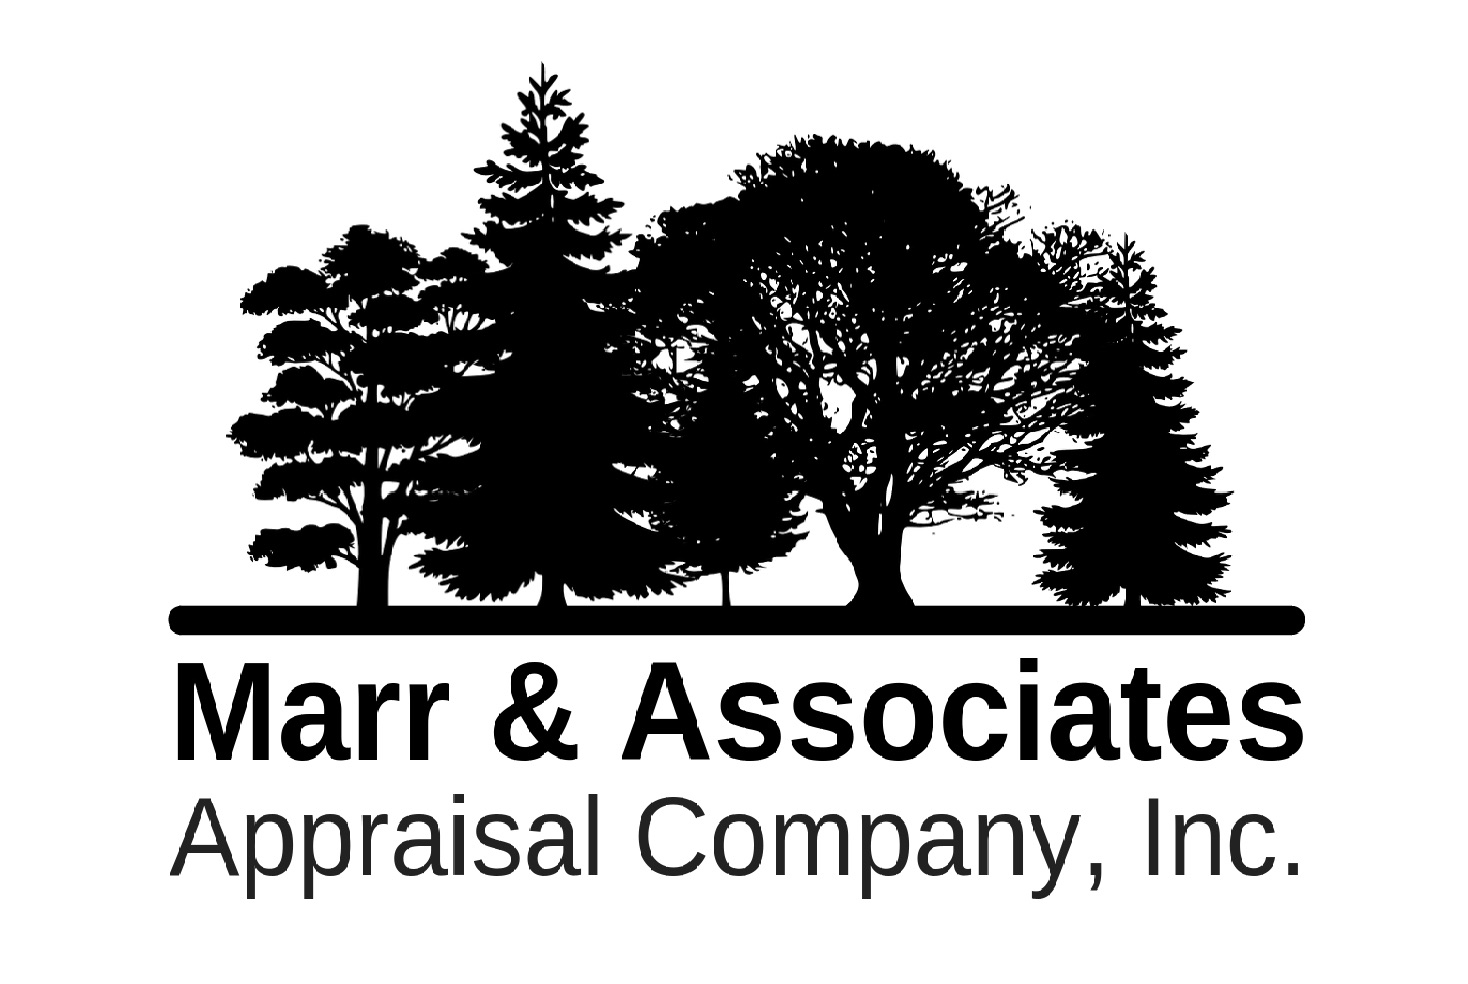 Marr & Associates